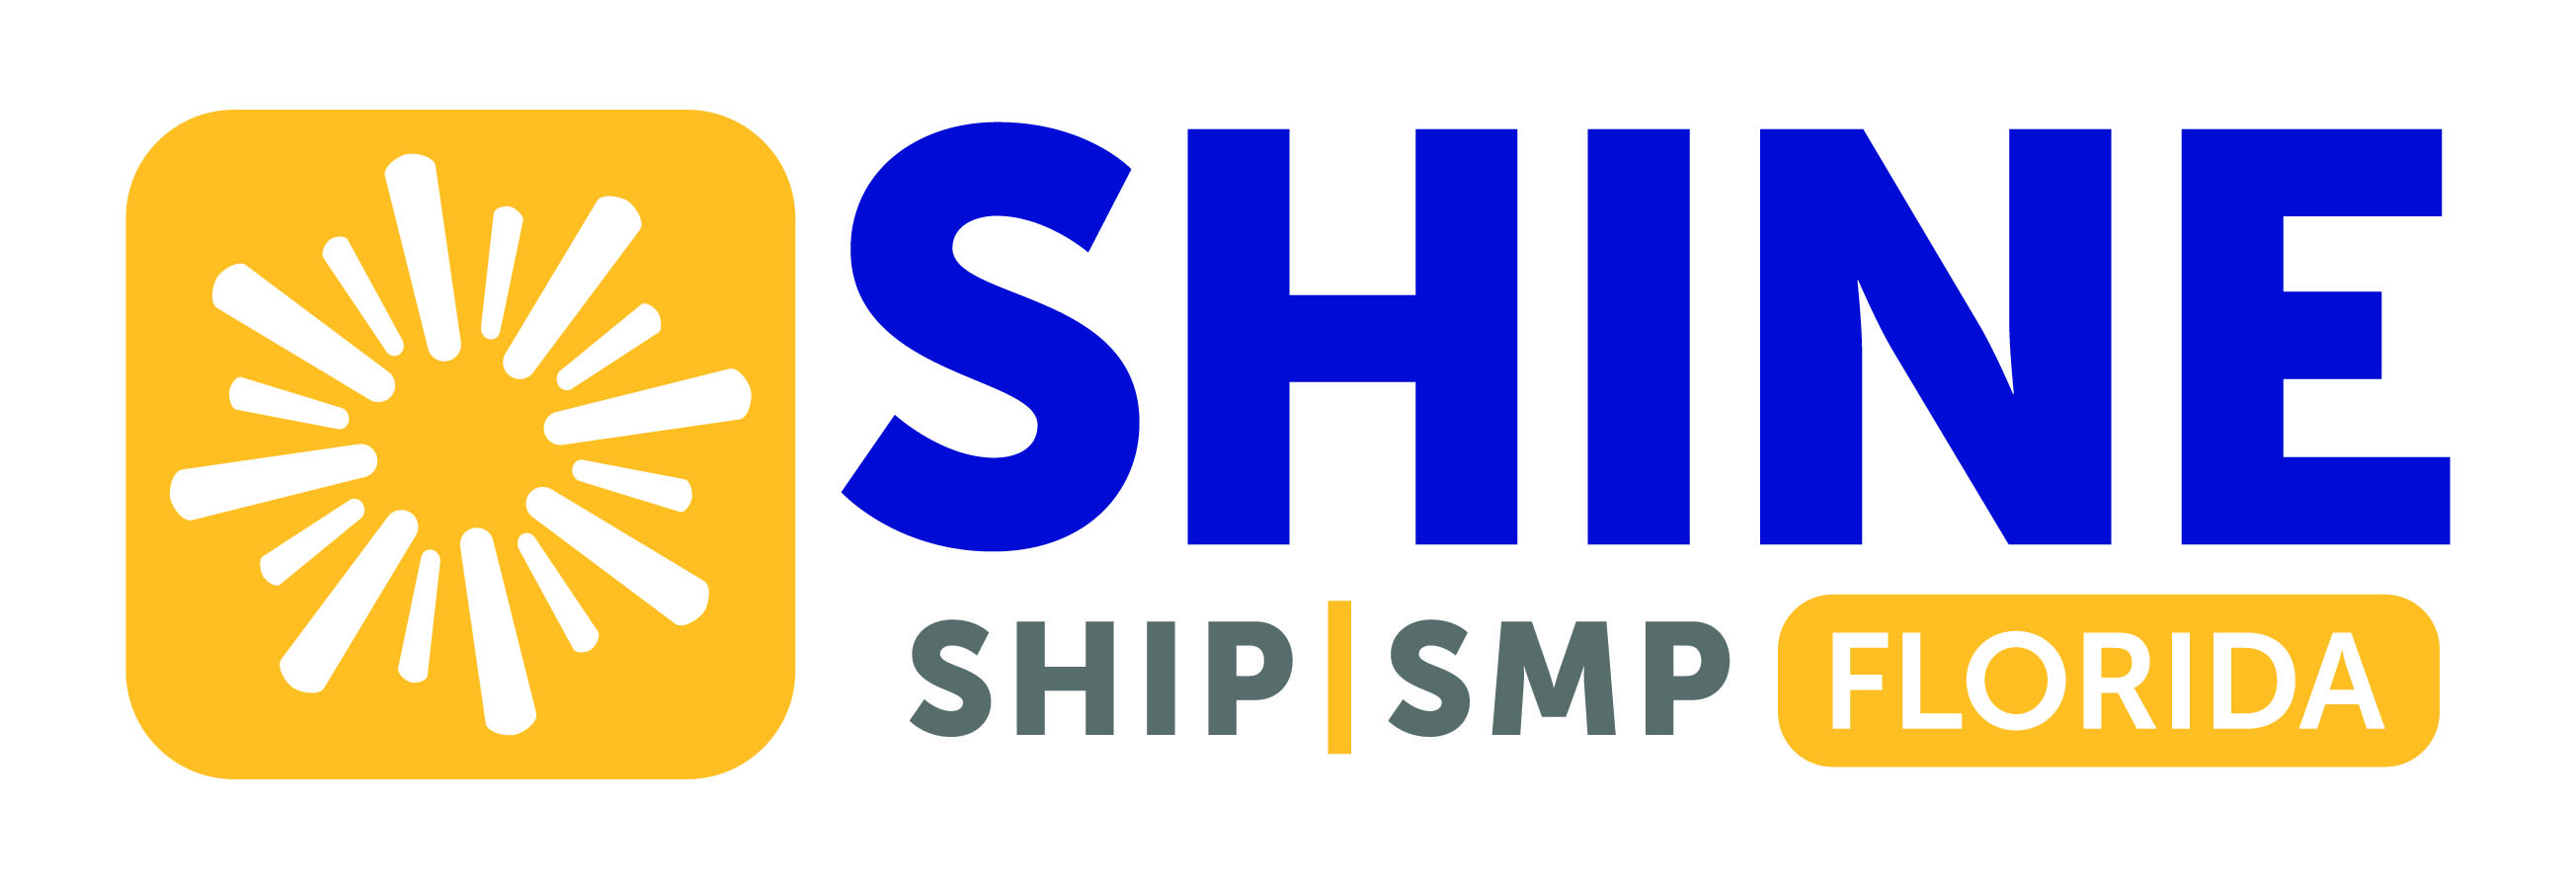 Contact Your SHIP - Florida